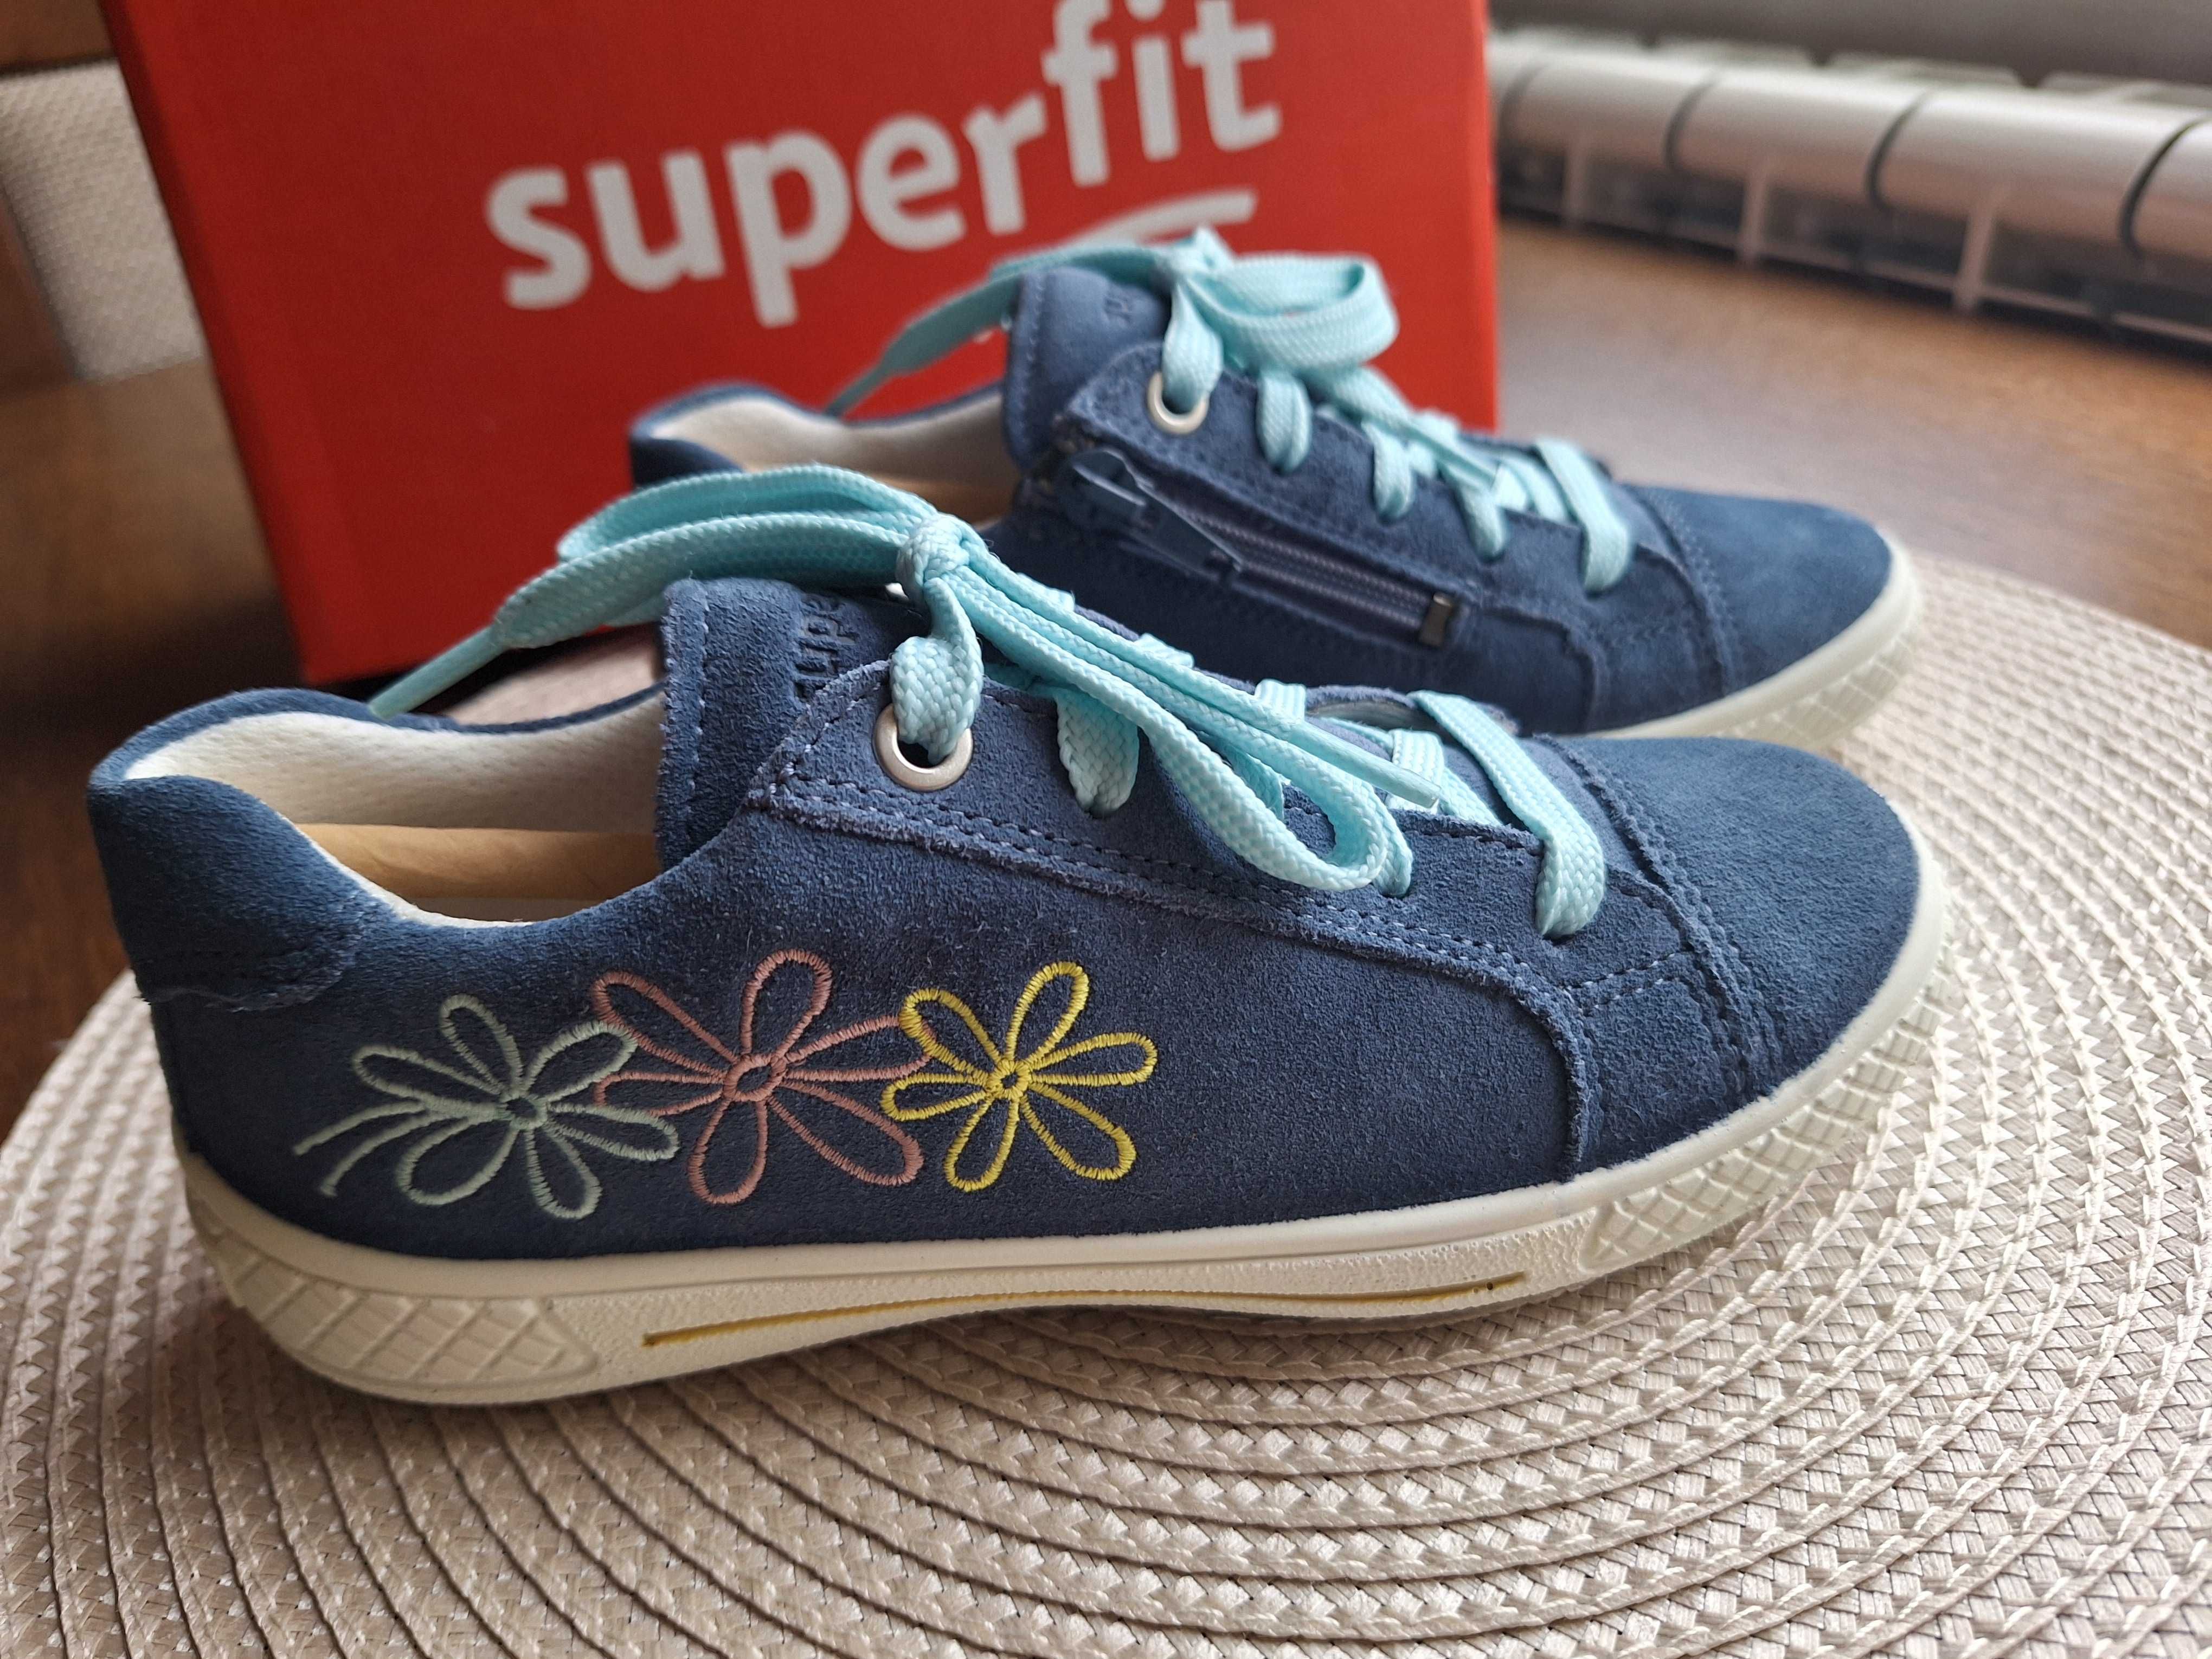 Нови обувки/сникерси/сандали на Geox и Superfit - н. 30